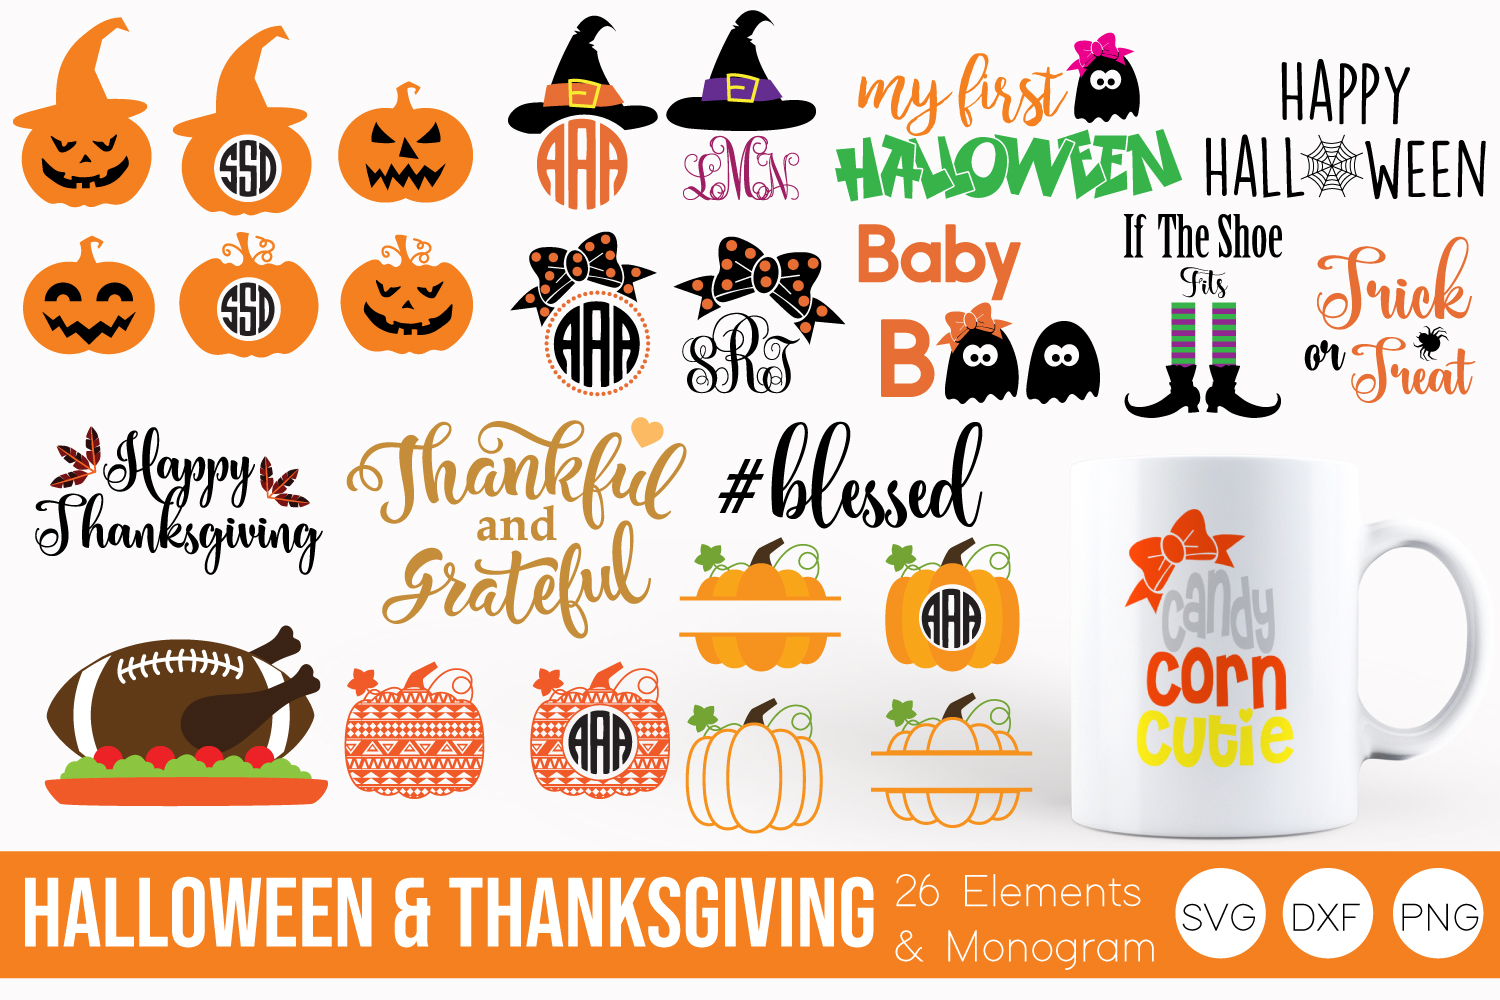 Halloween & Thanksgiving SVG, DXF, PNG Bundle Cut Files